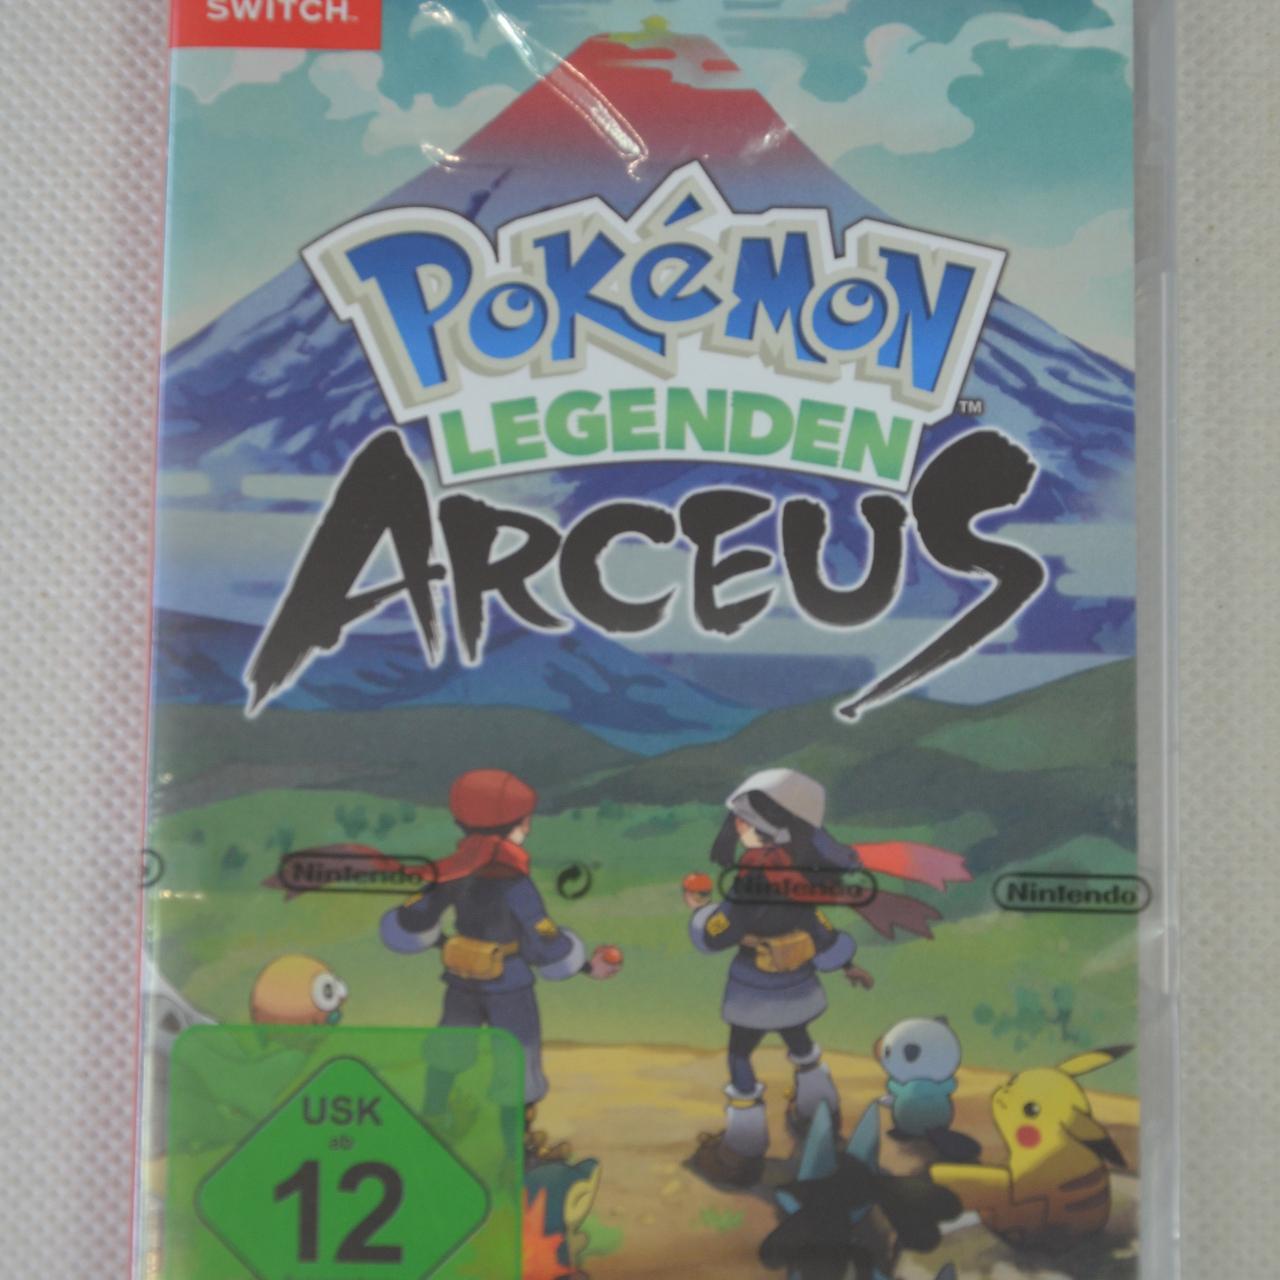 (Nintendo - Legends: Switch) Pokemon Depop Arceus